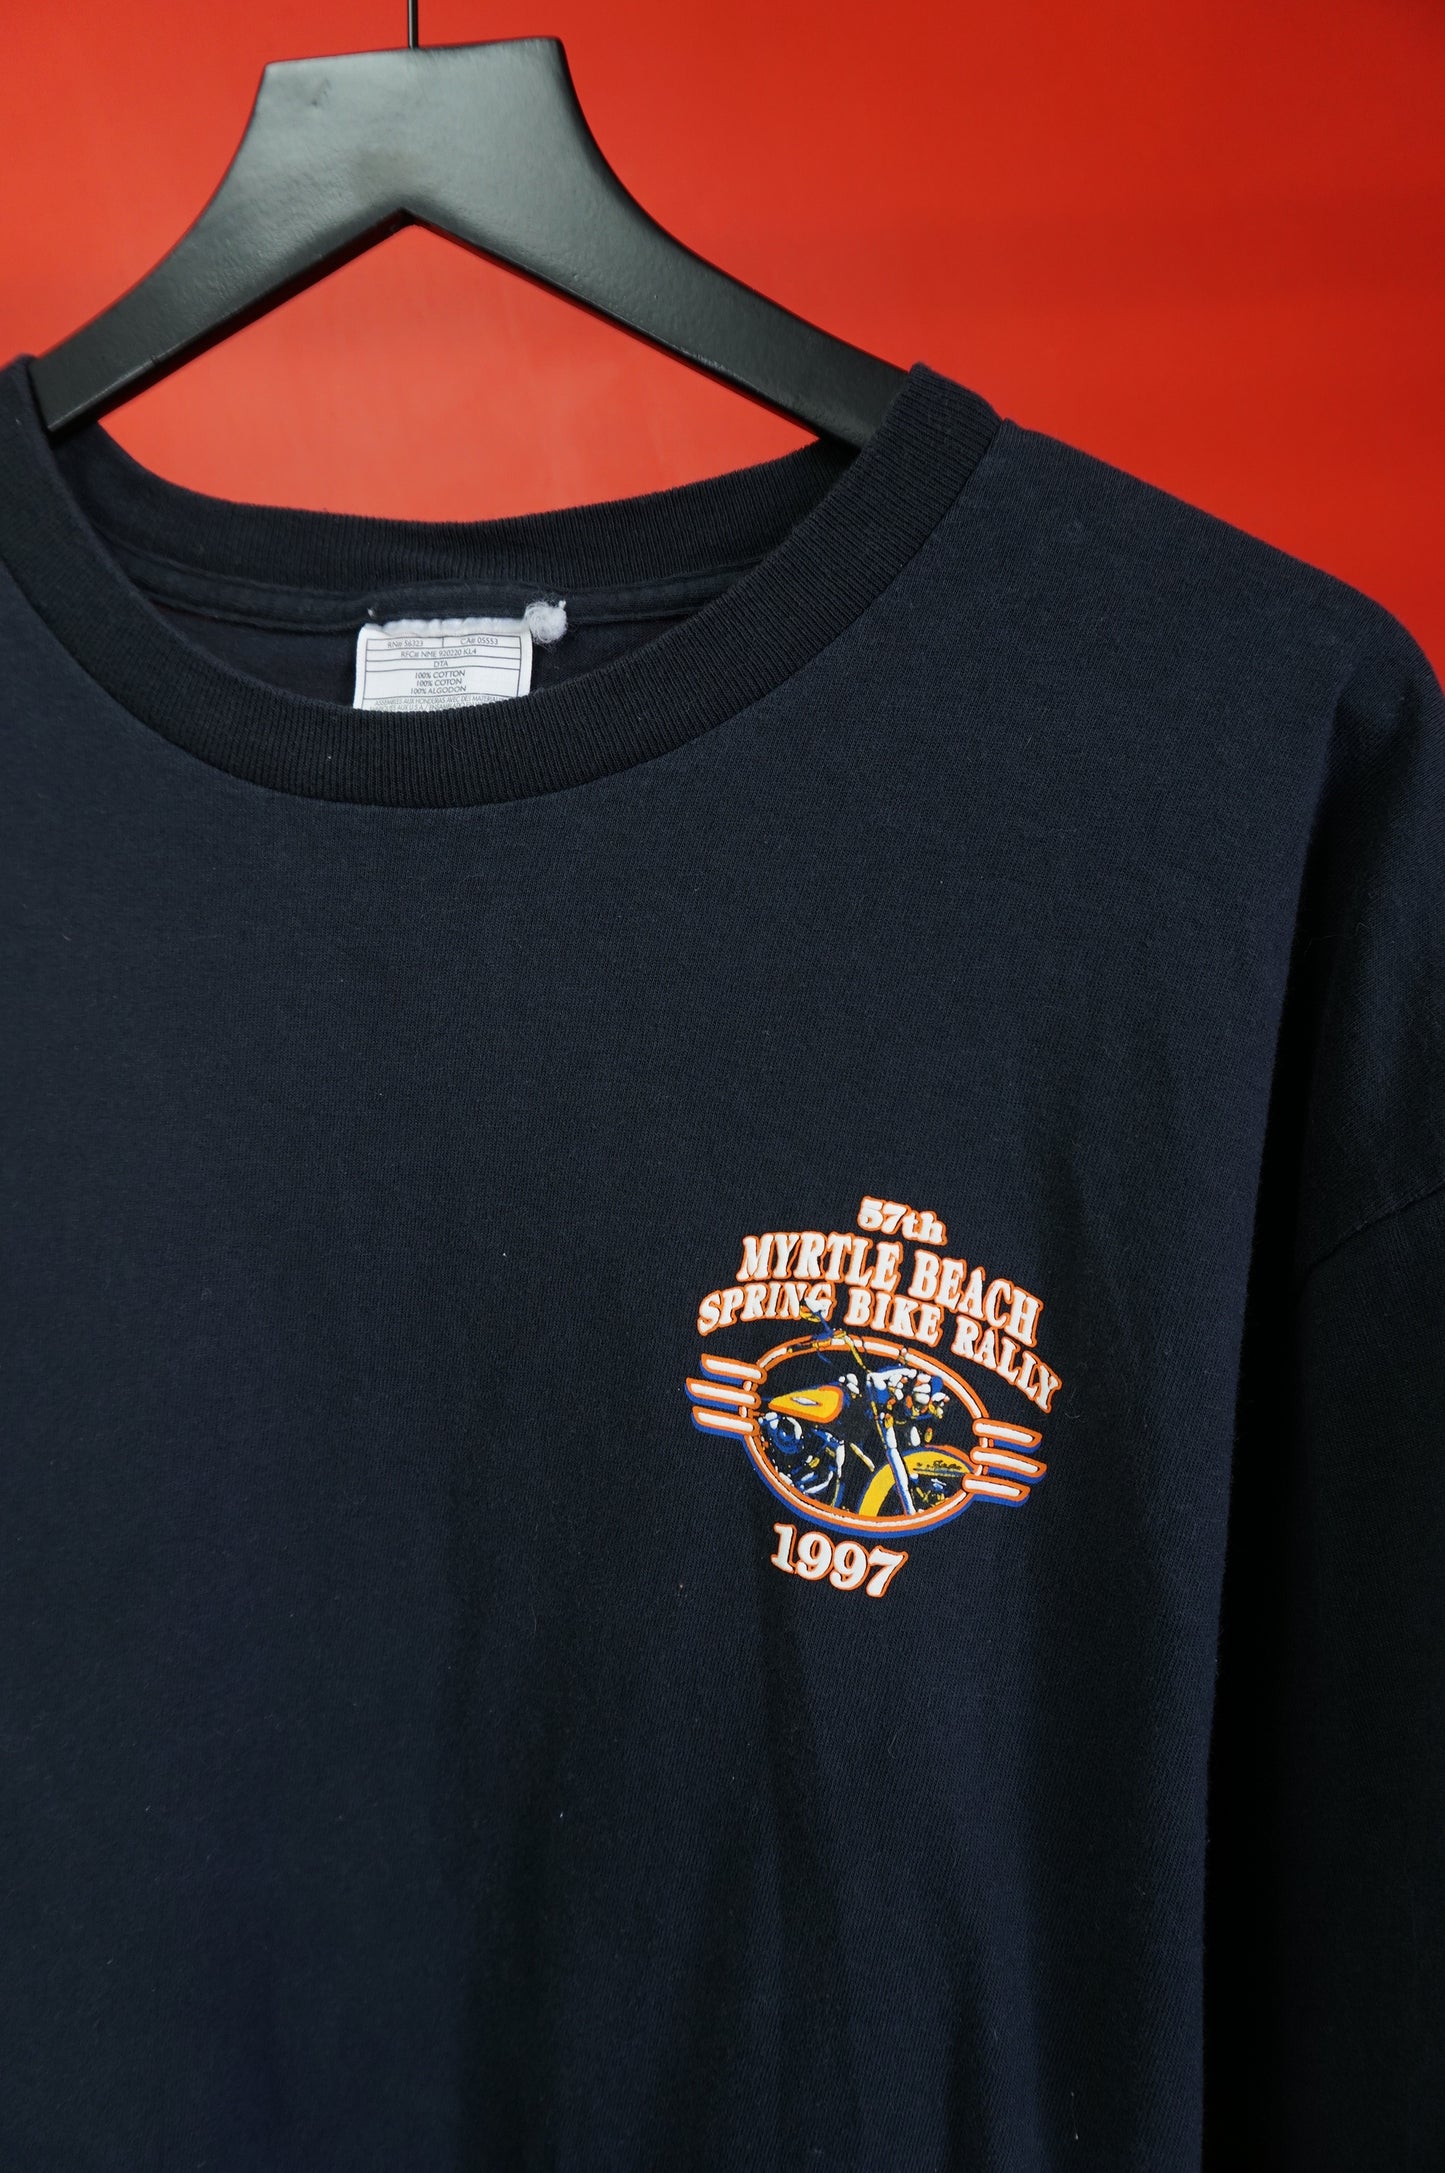 (L/XL) 1997 Myrtle Beach Bike Rally T-Shirt